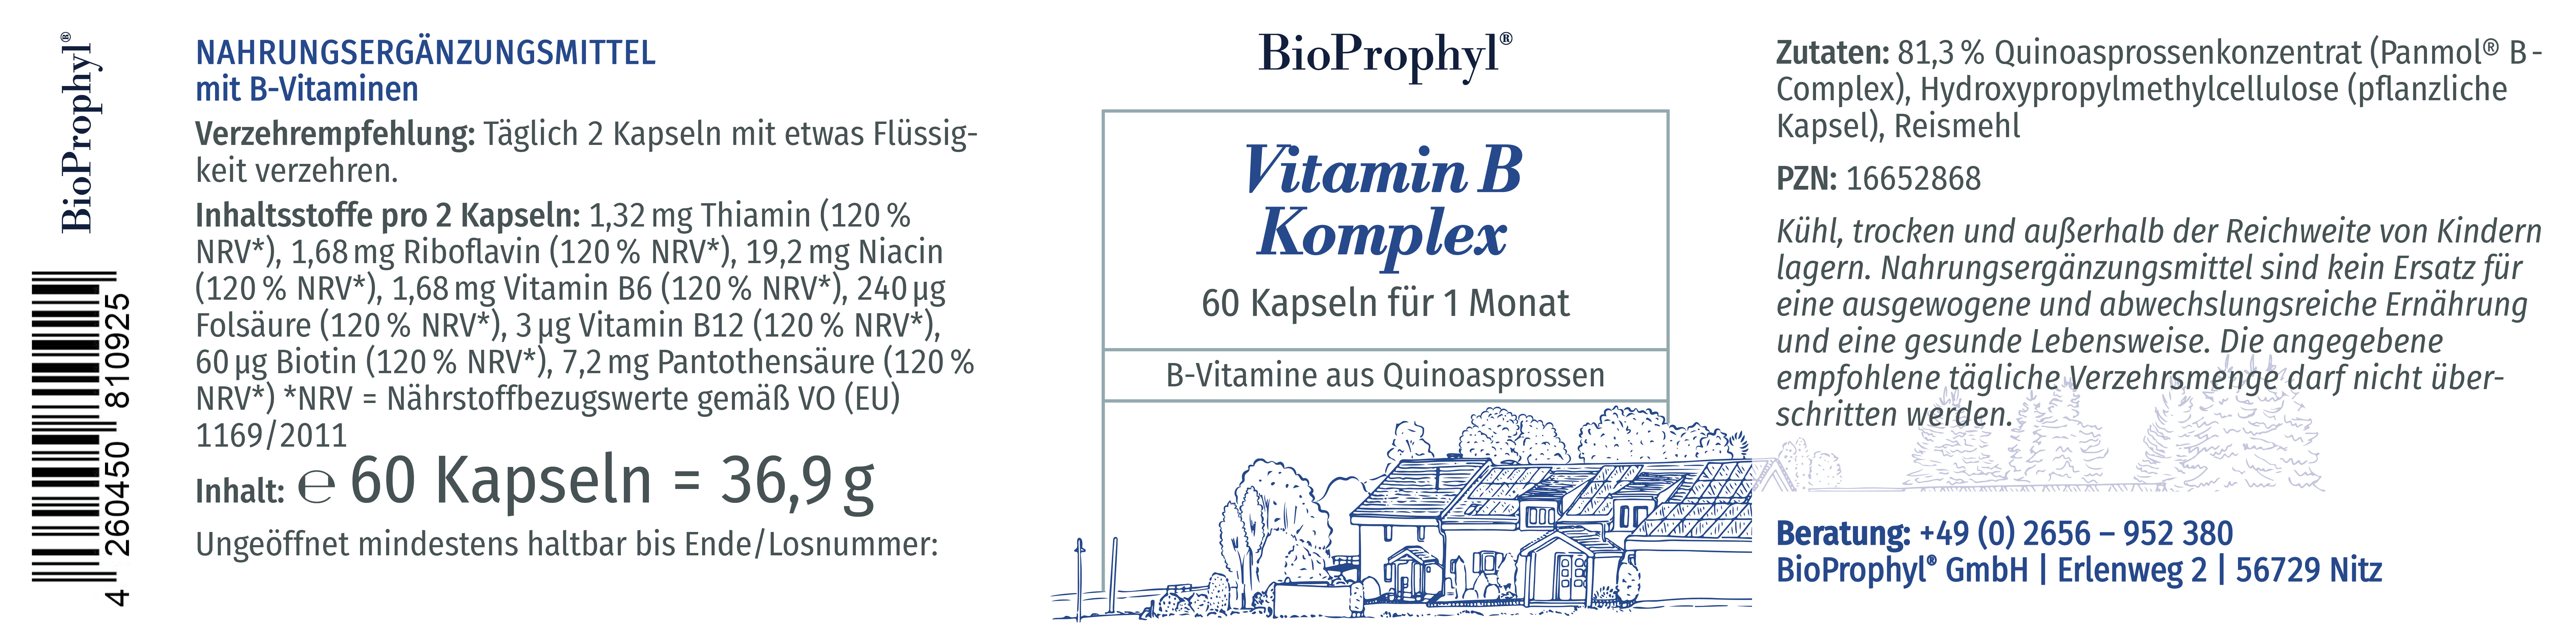 Produktetikett von Vitamin B Komplex